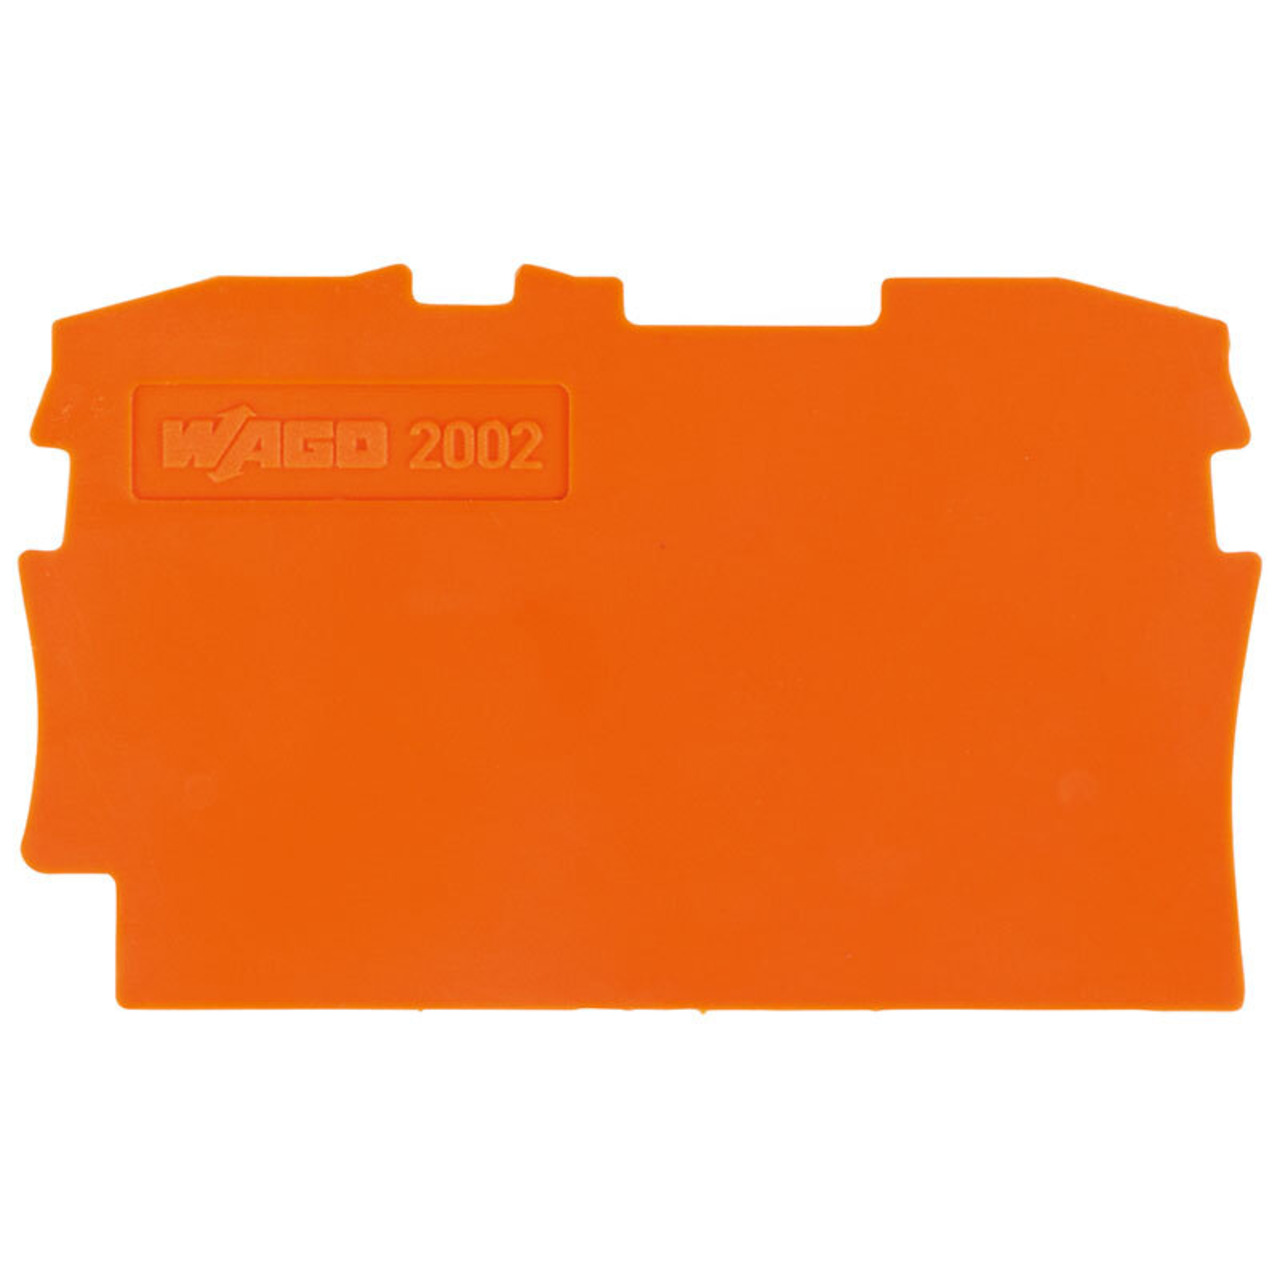 Wago Trennplatte 2002-1294- orange- 2 mm dick unter Komponenten